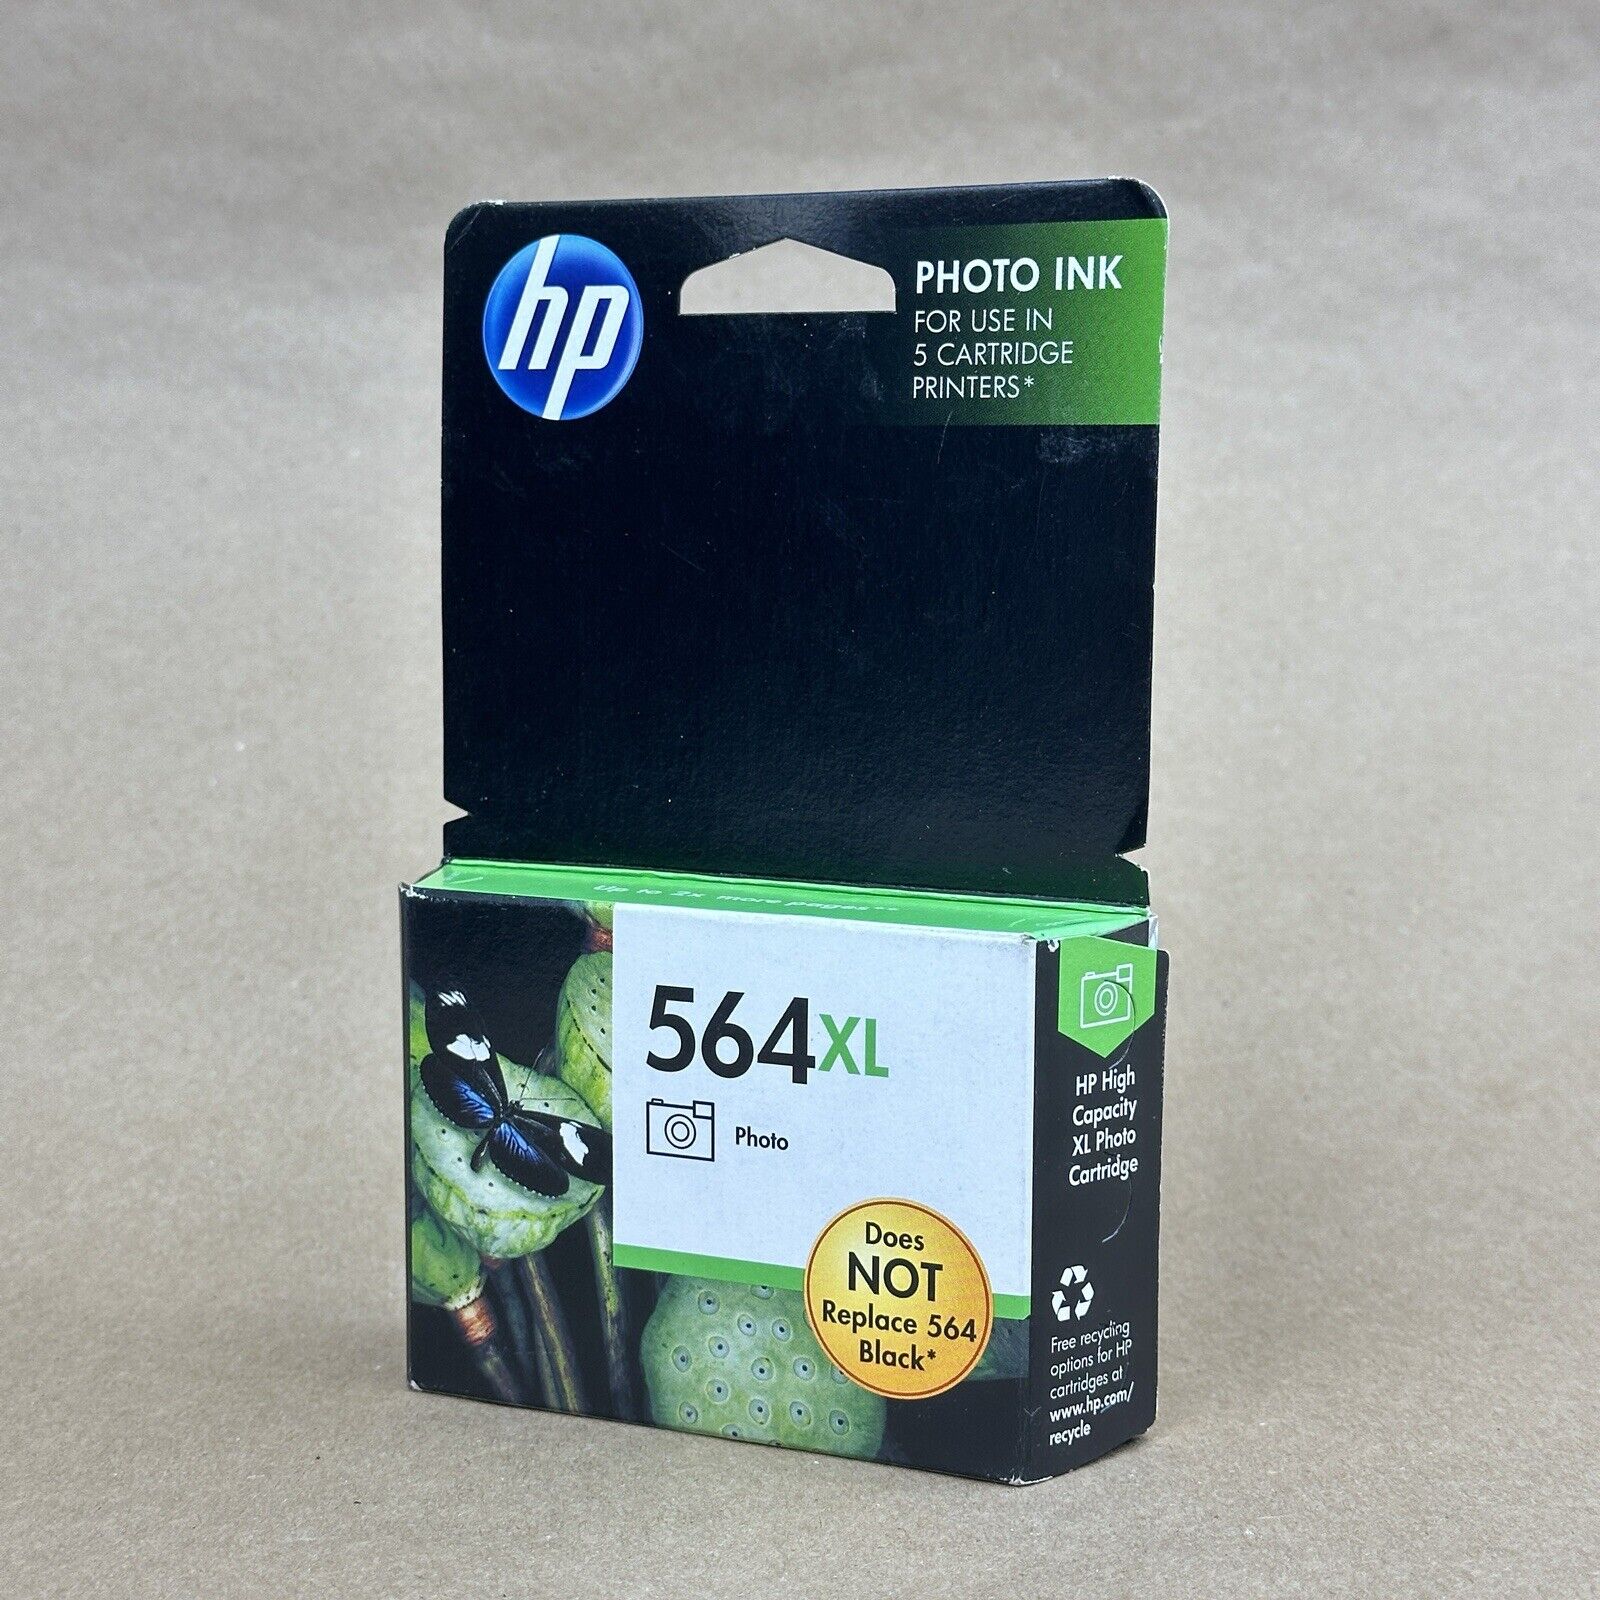 New HP 564XL Photo Ink Cartridge Expired Feb 2014